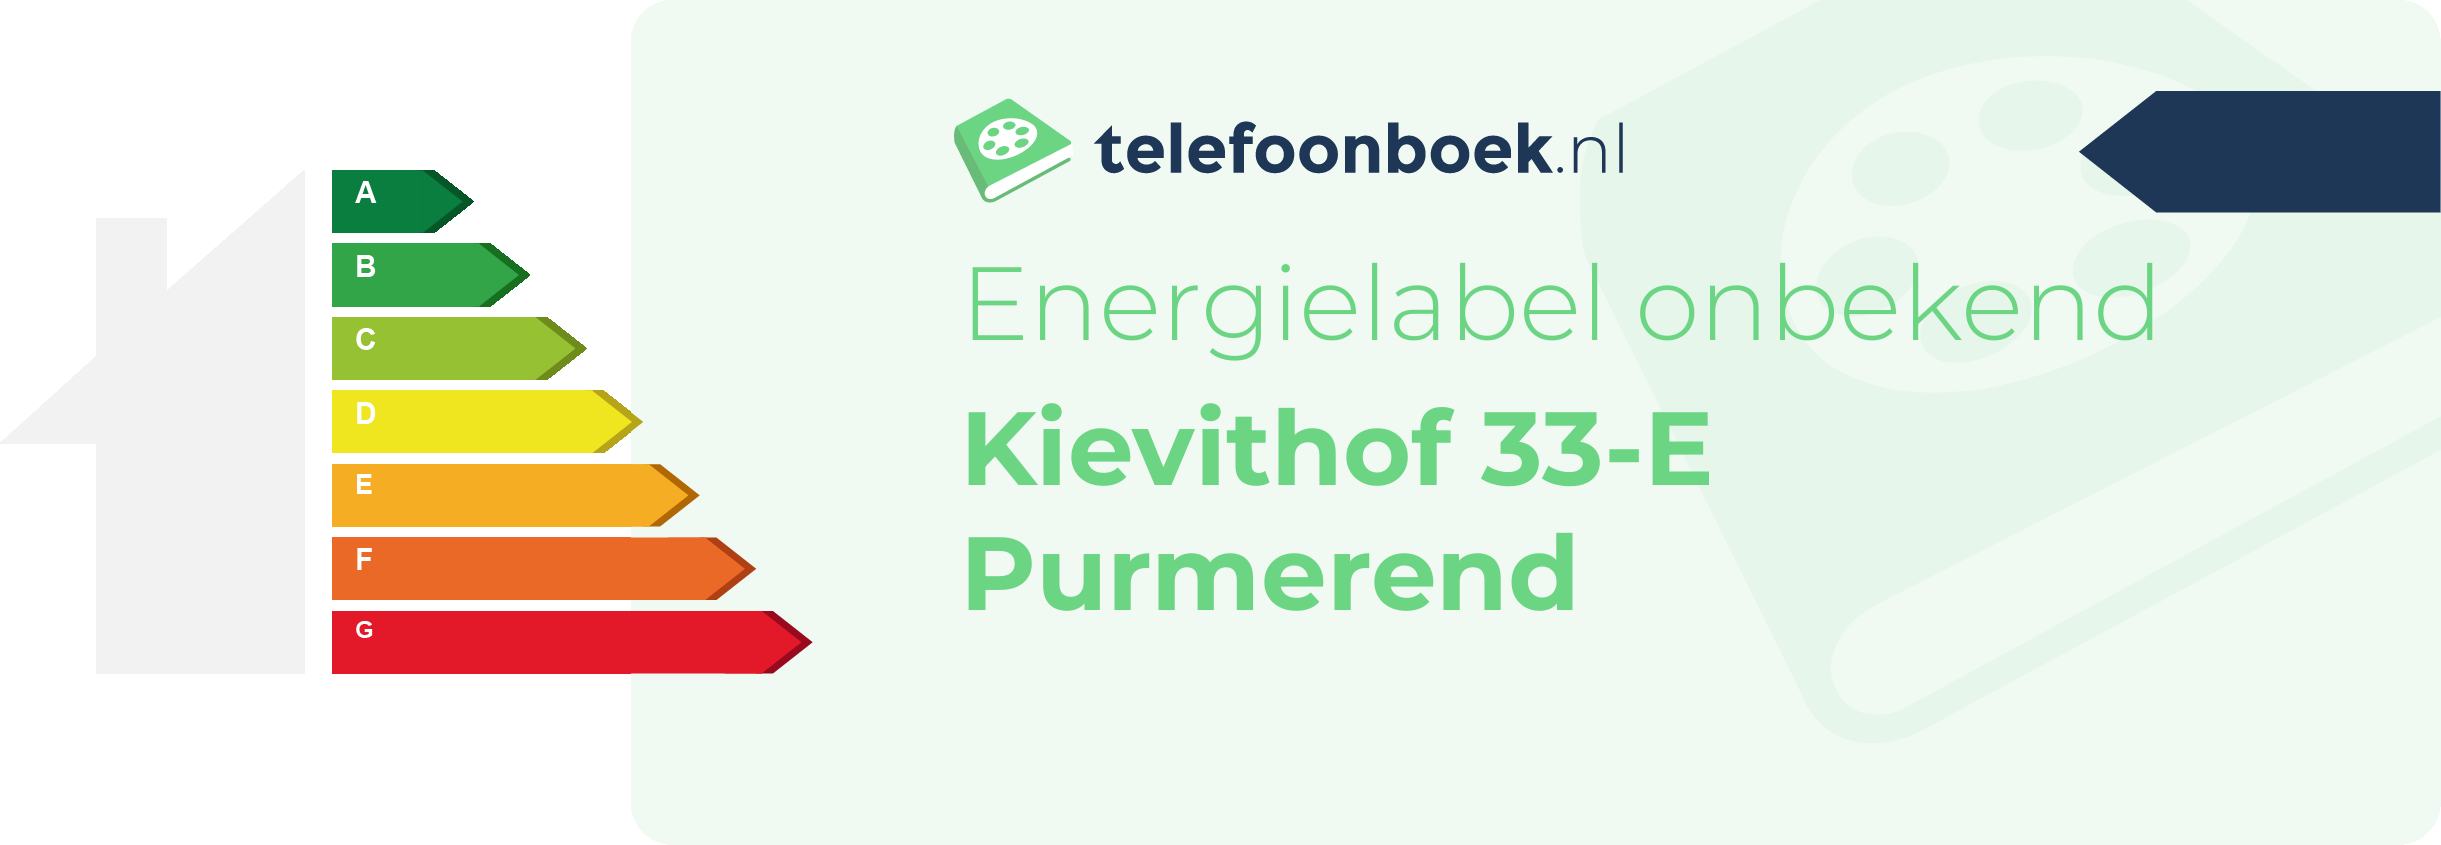 Energielabel Kievithof 33-E Purmerend